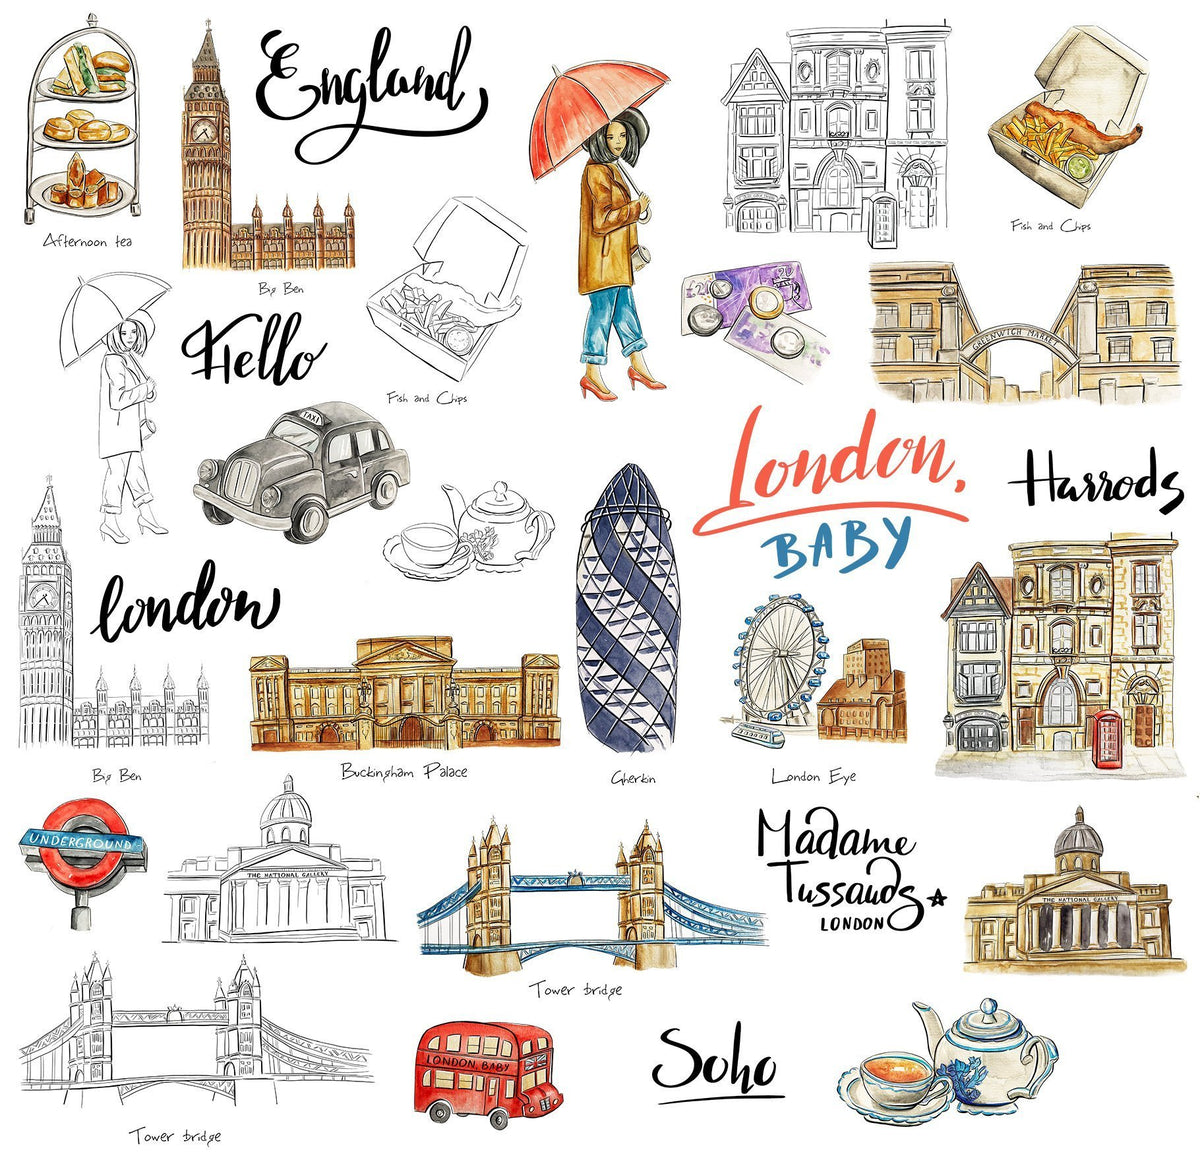 London sticker pack for Travel journal - England UK Trip